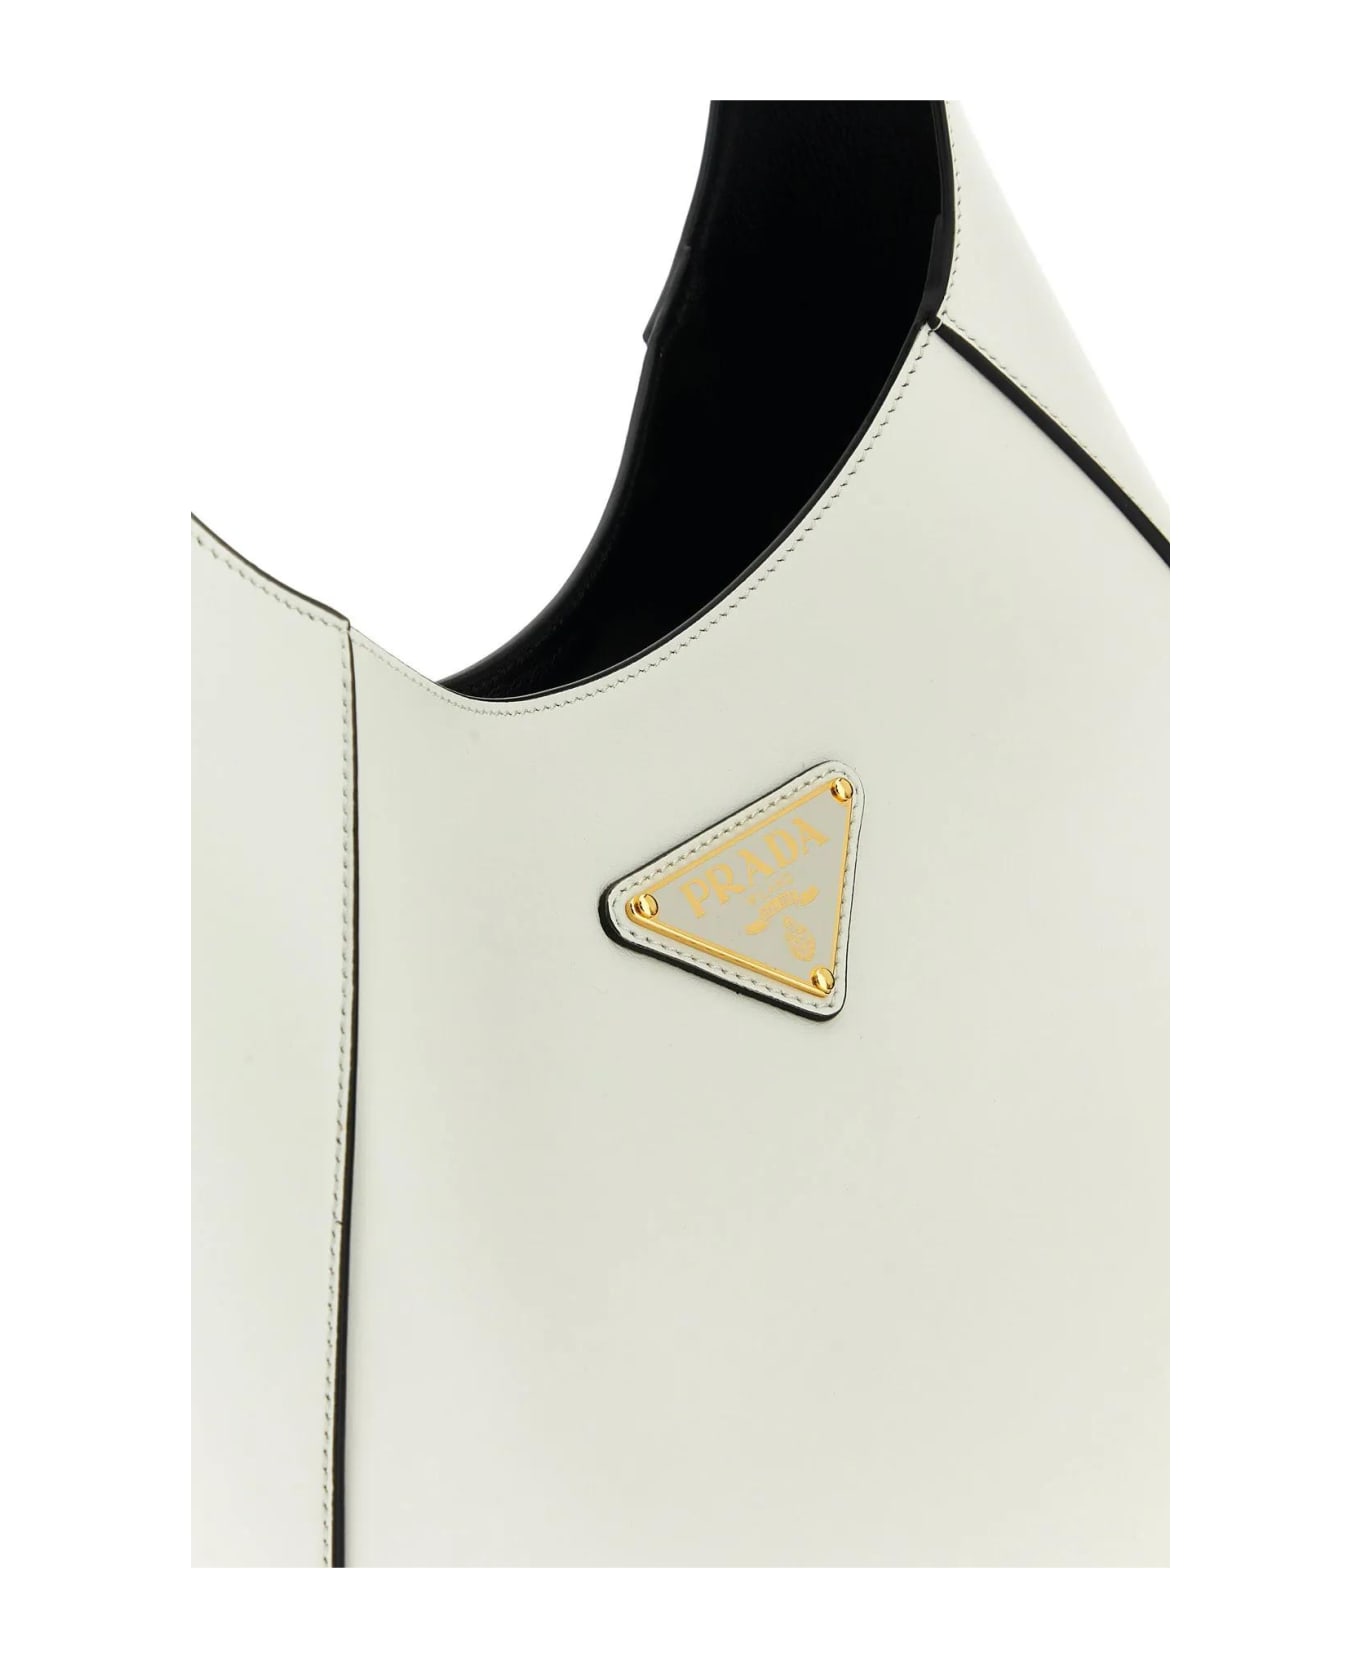 Prada White Leather Shoulder Bag - BIANCONERO